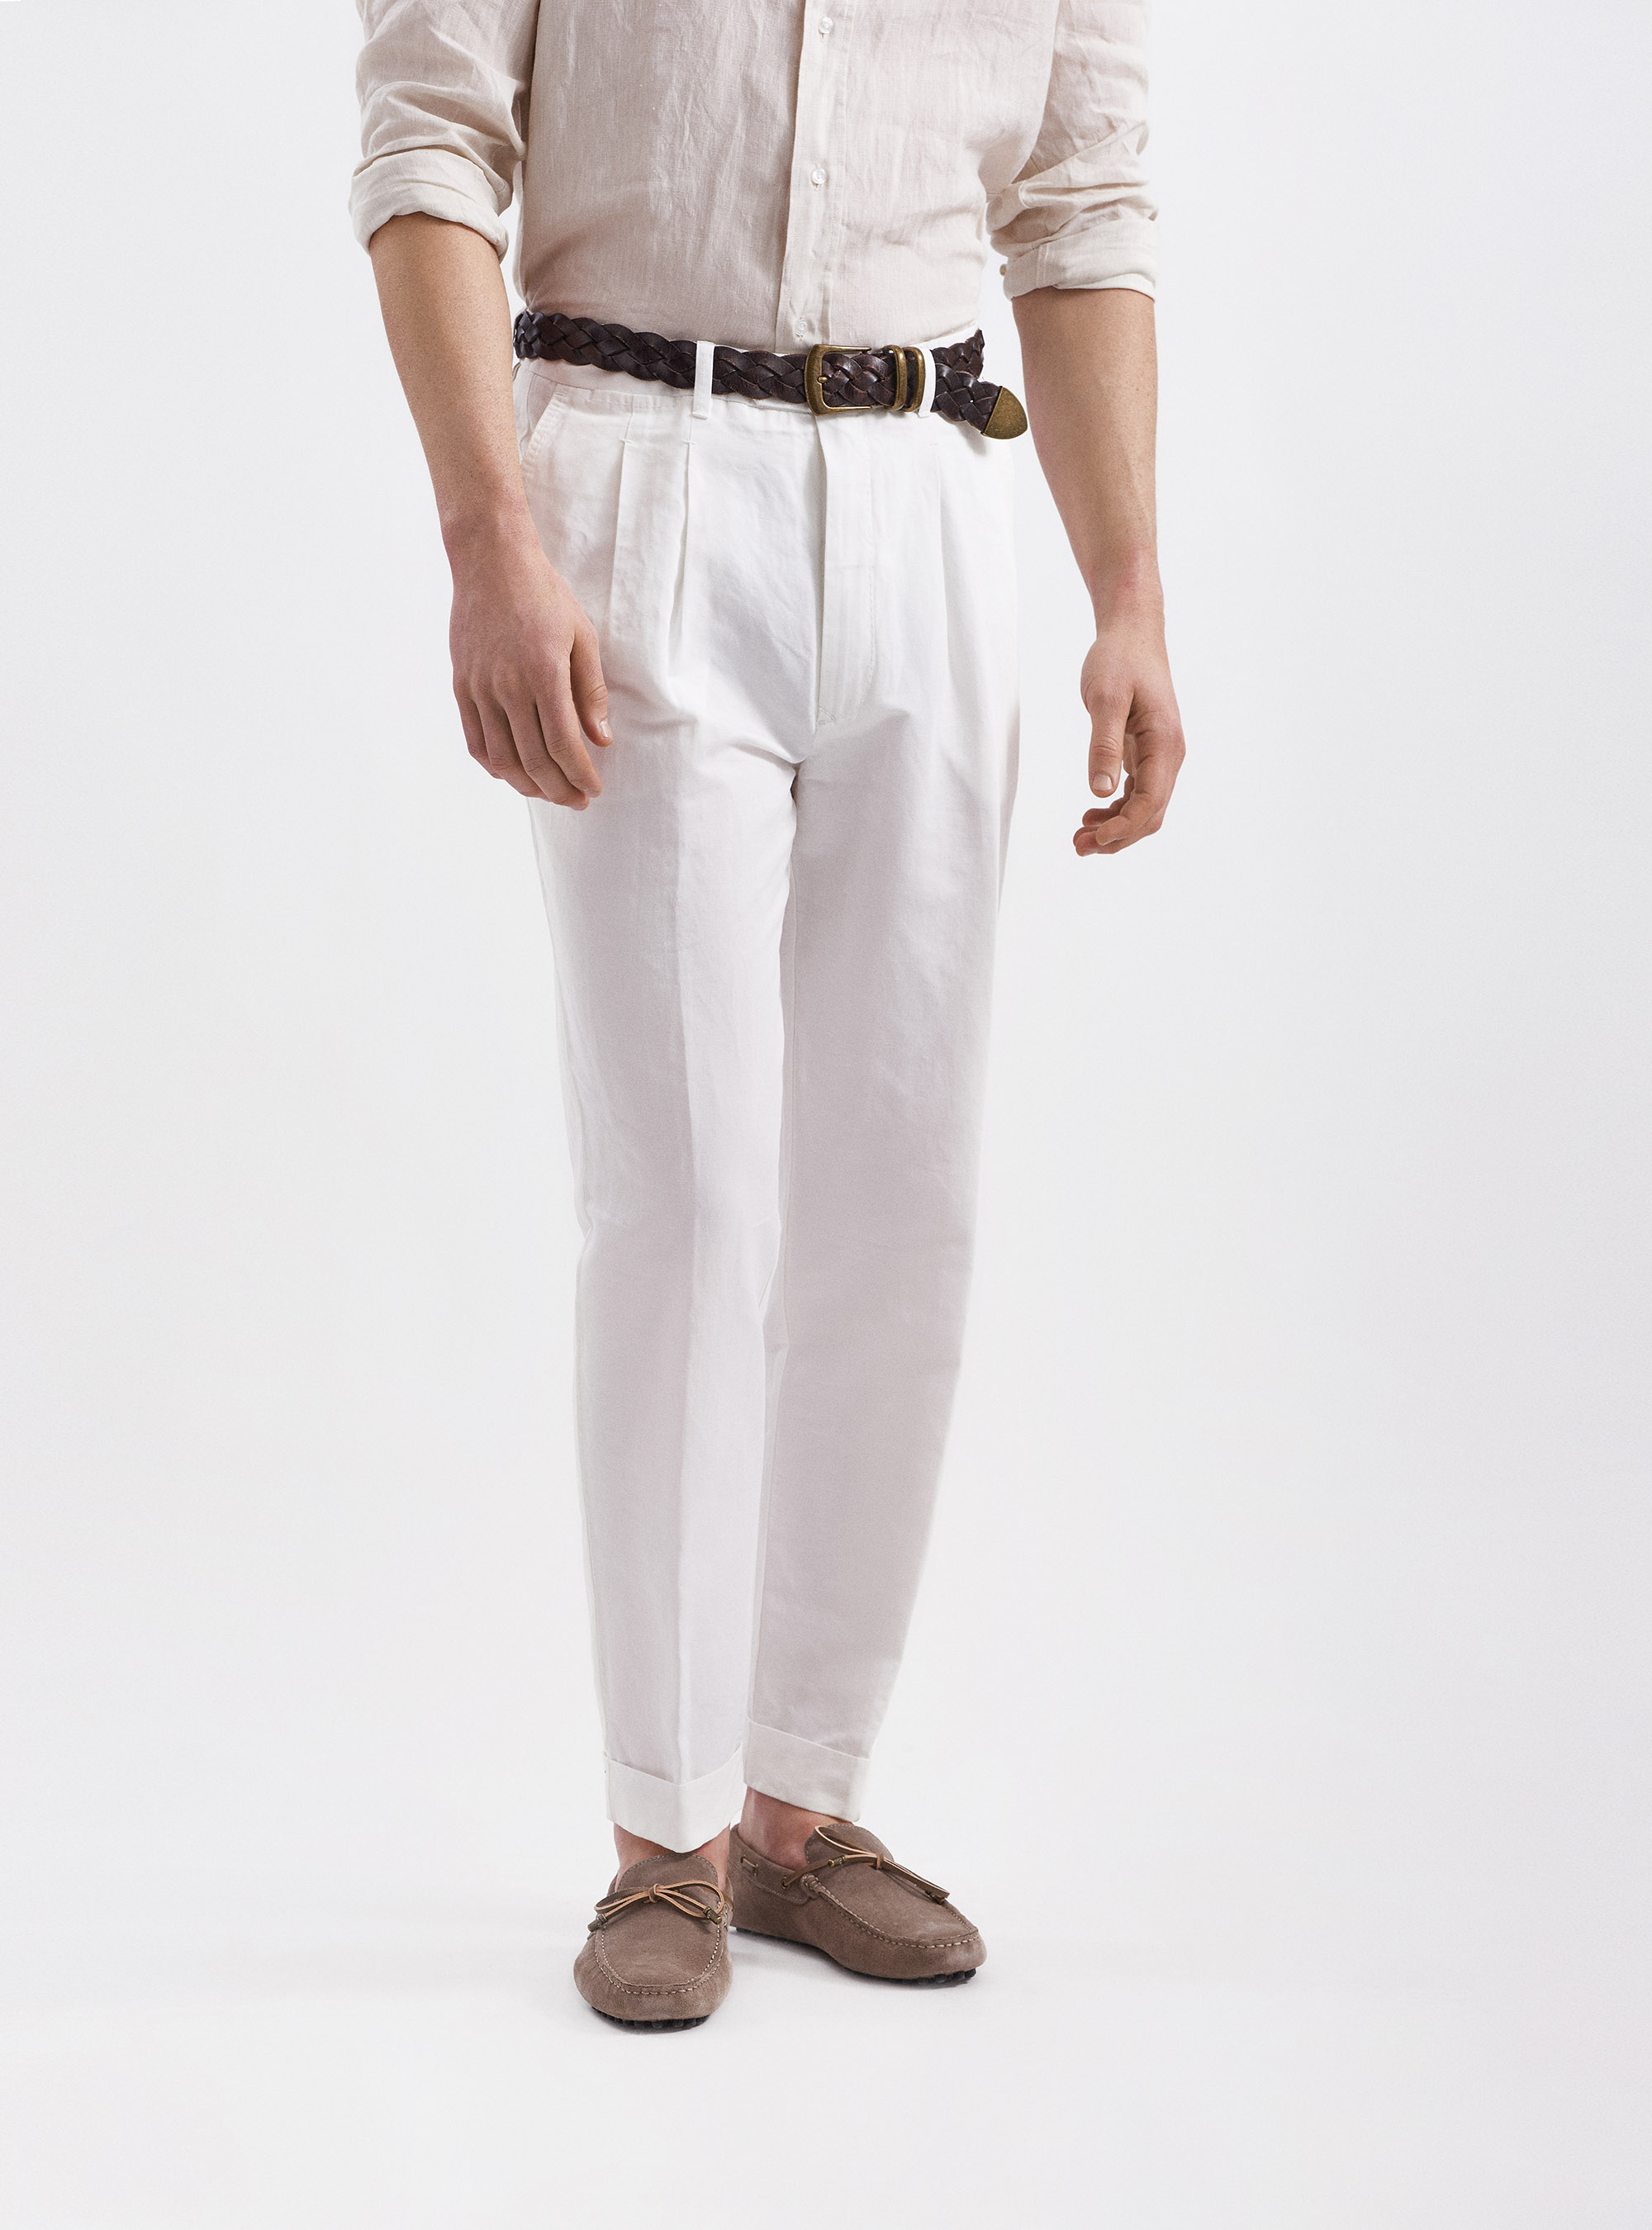 Gallickan Mens Linen Pants Casual Lightweight Linen Trousers Elastic Tie  Printed Straight Pants Soft Lounge Pants On Sale  Walmartcom